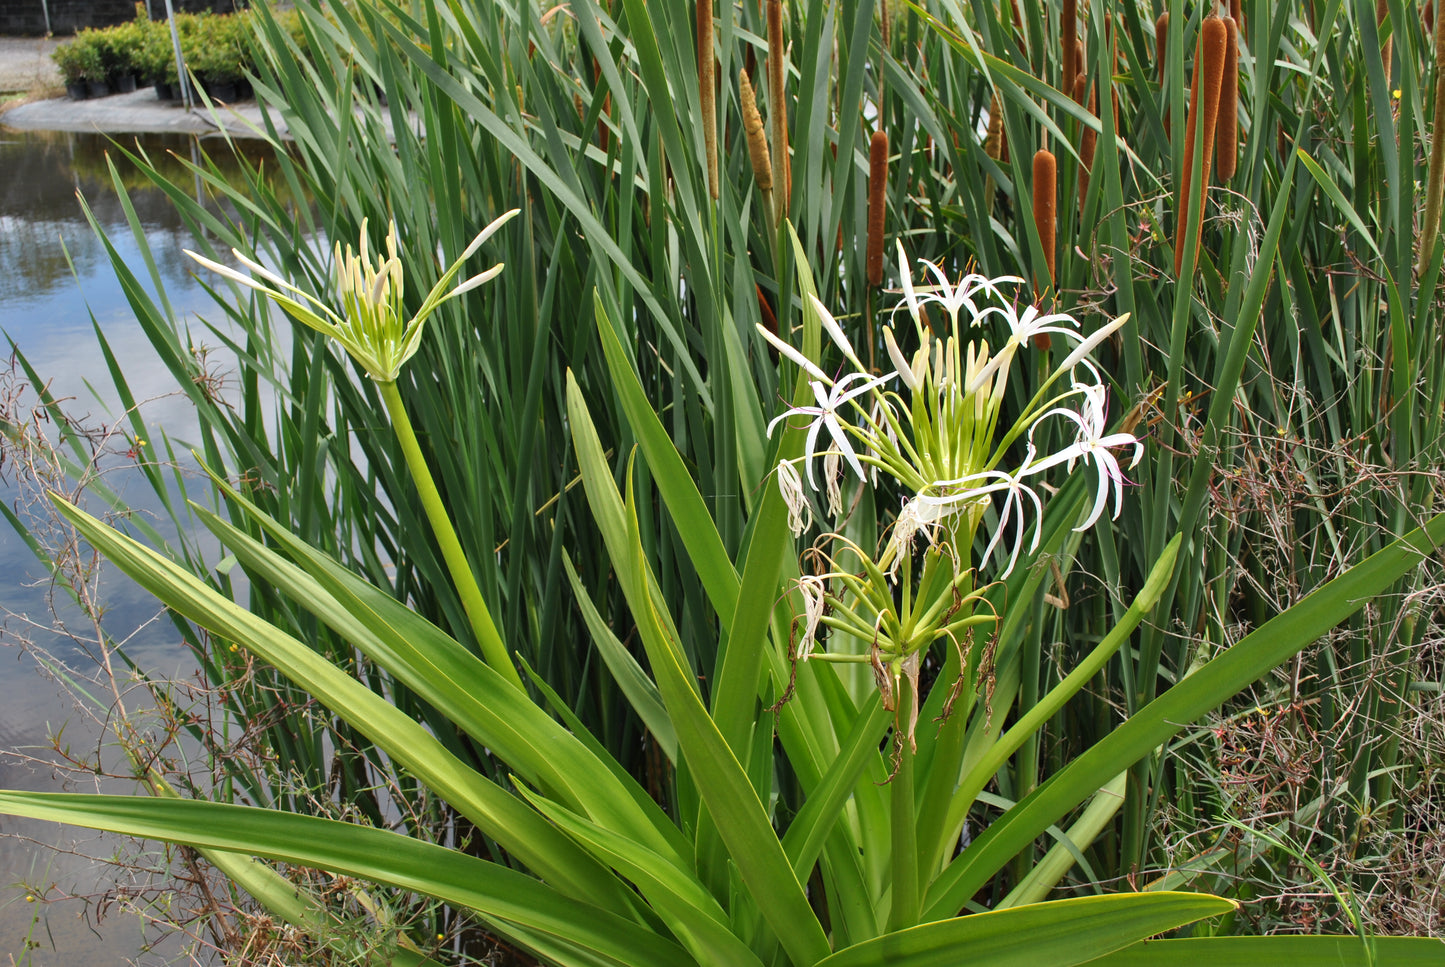 Crinum pedunculatum 'Swamp Lily' in flower on a manmade bank